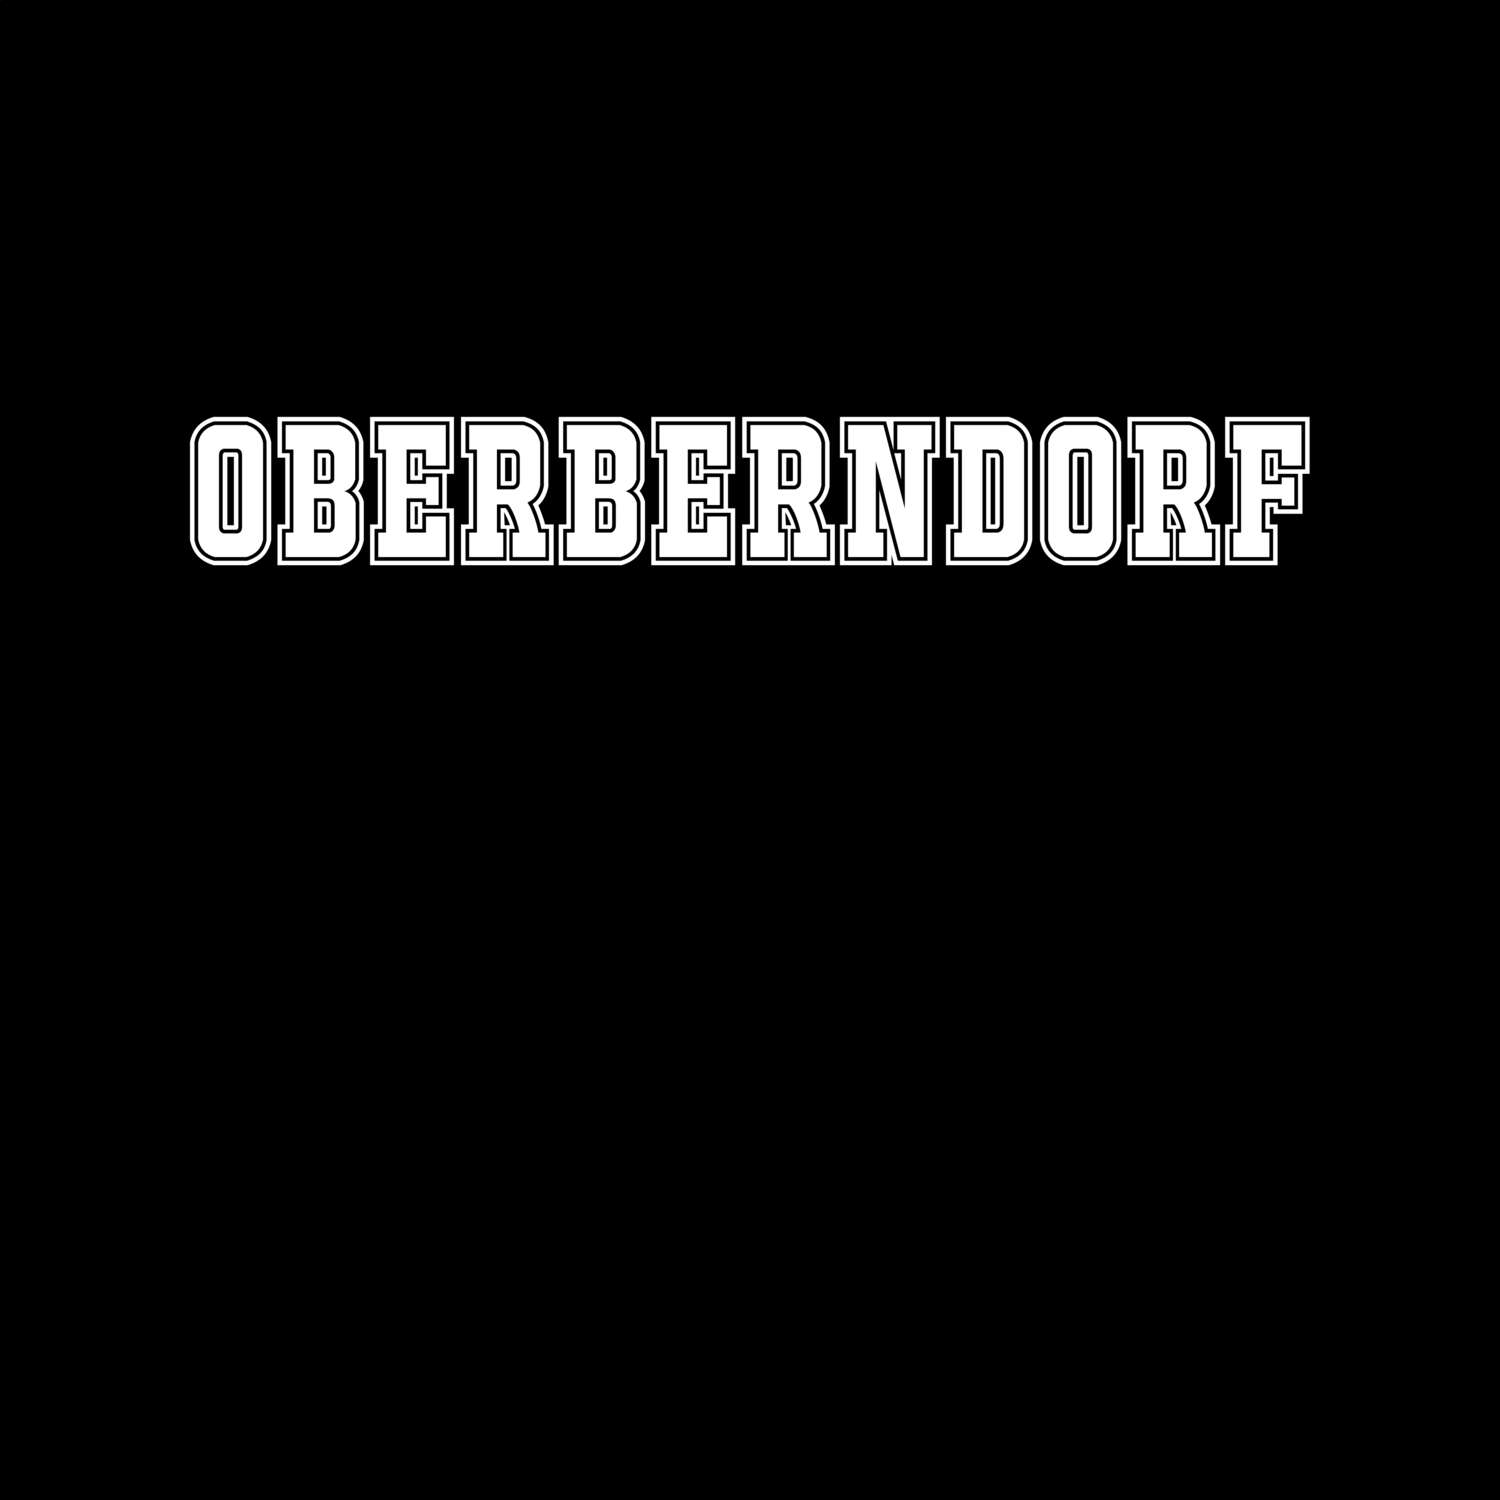 Oberberndorf T-Shirt »Classic«